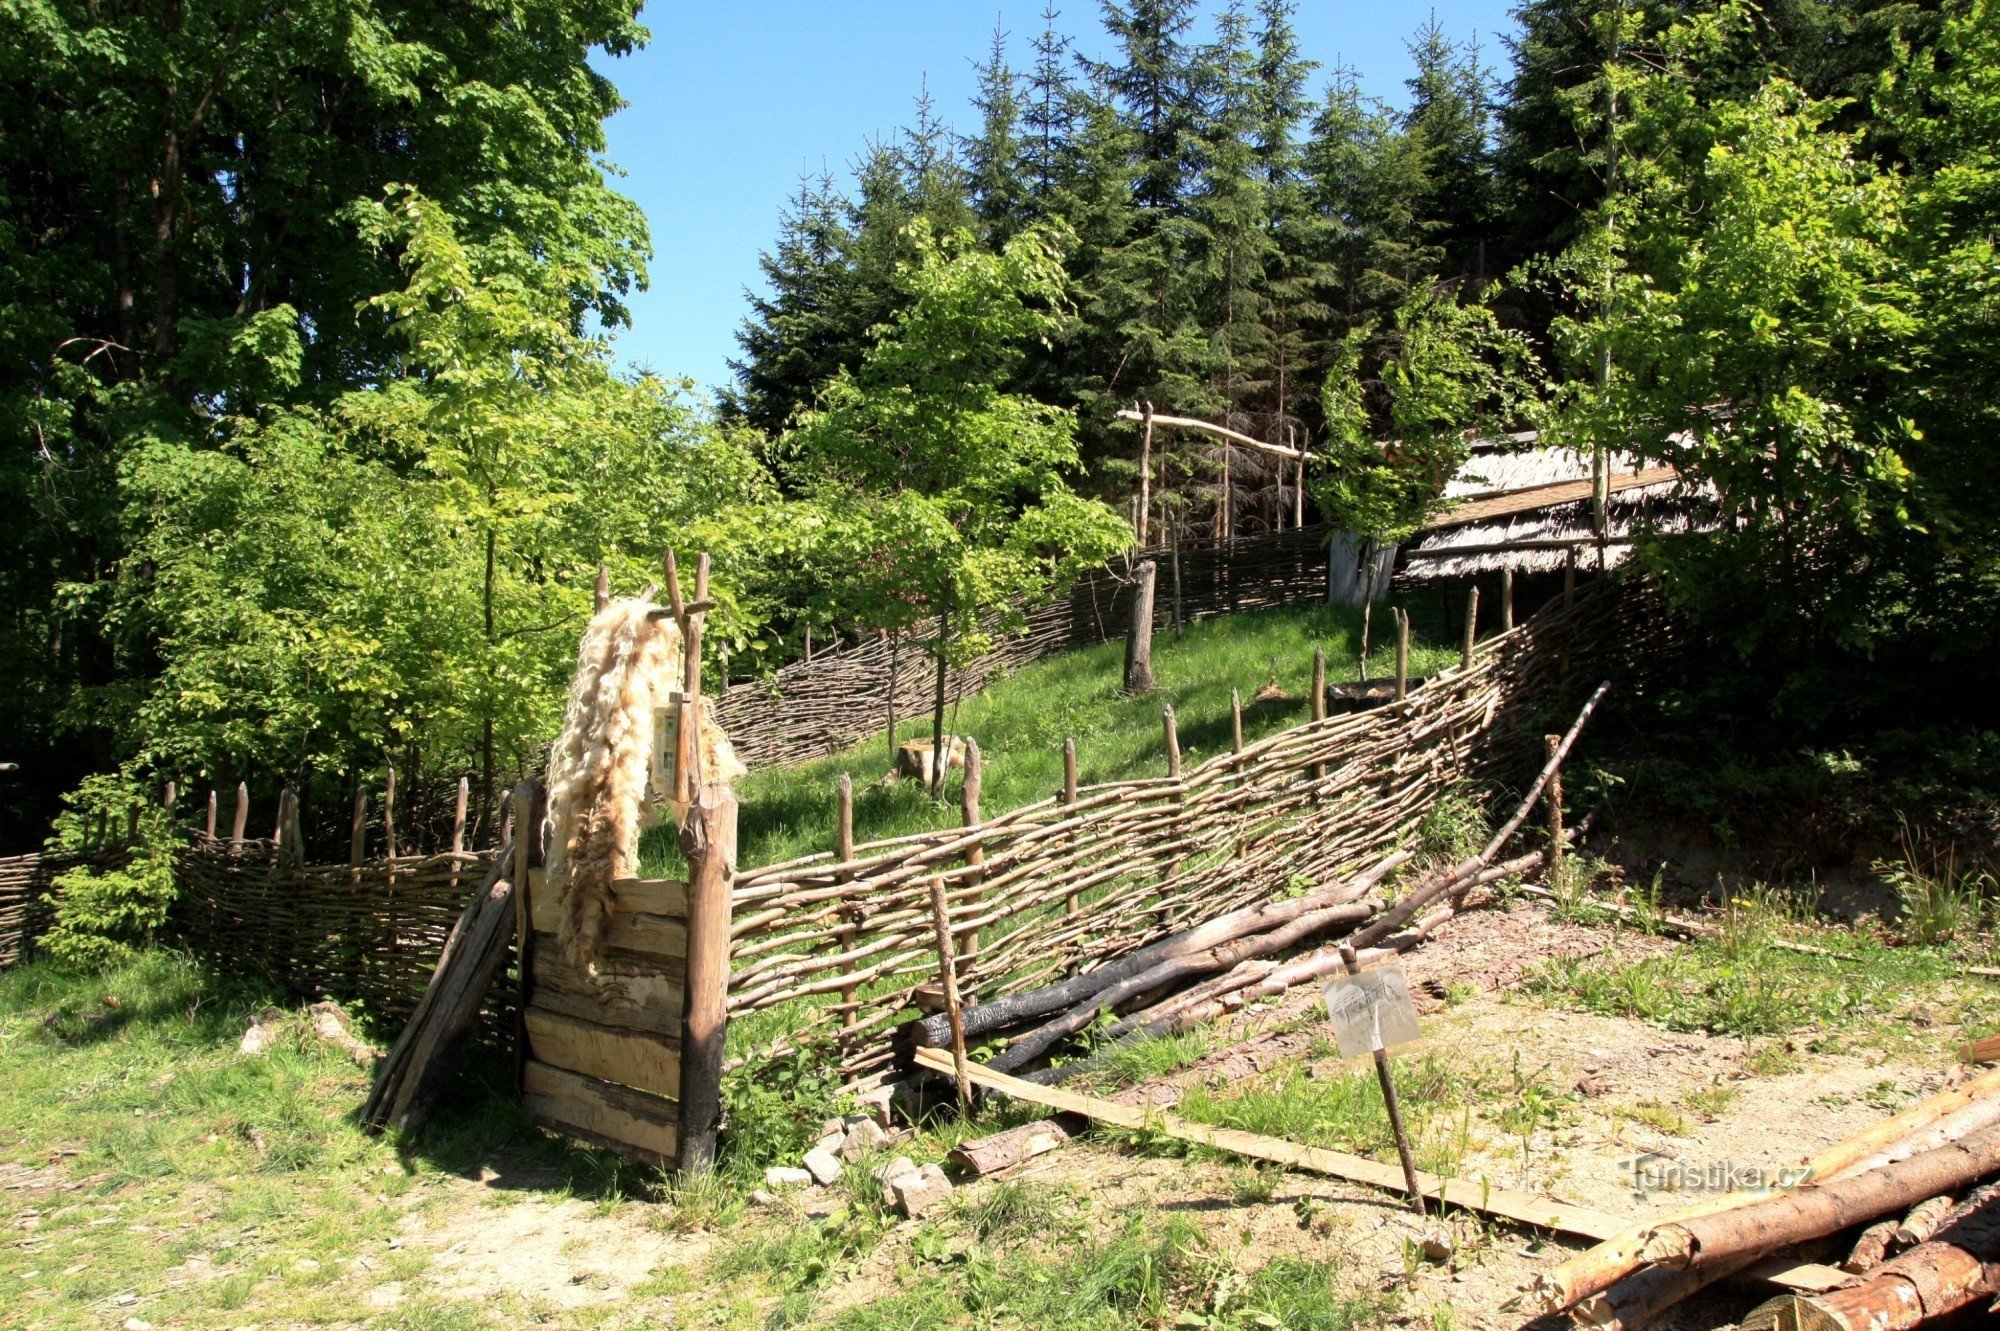 Křivolík - αντικείμενα στον οικισμό